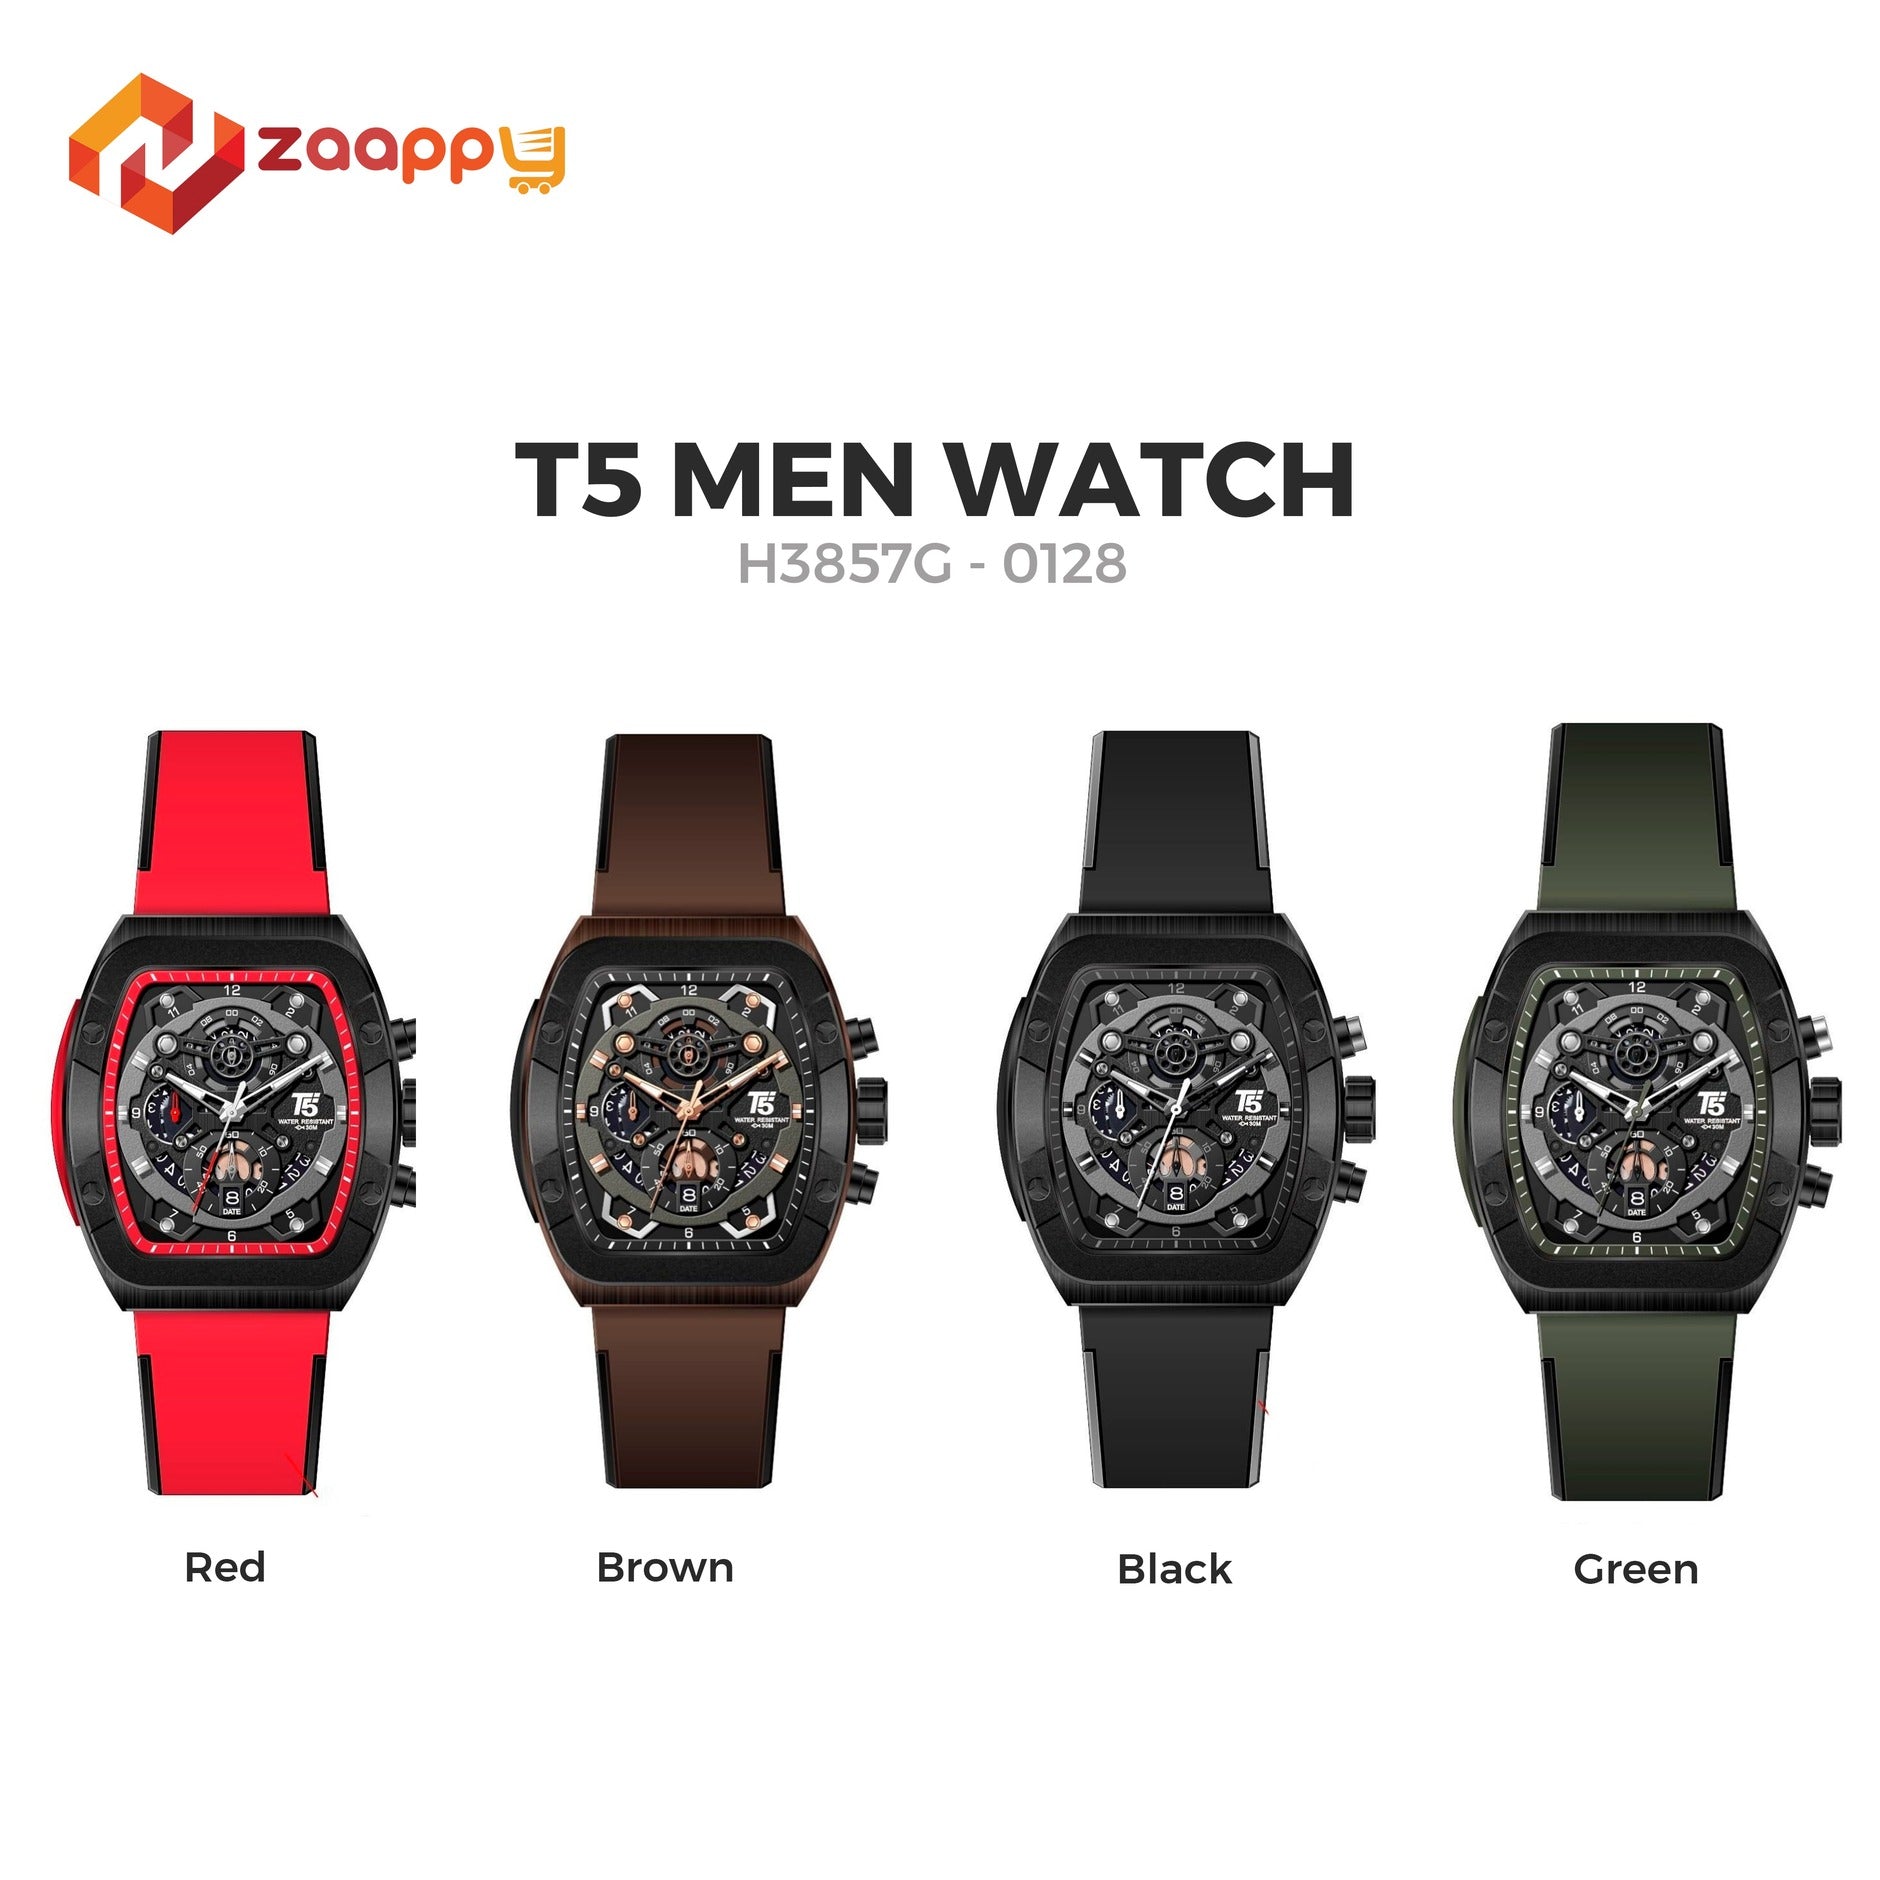 T5 Watch H3857G | Men Chronograph Zaappy.com